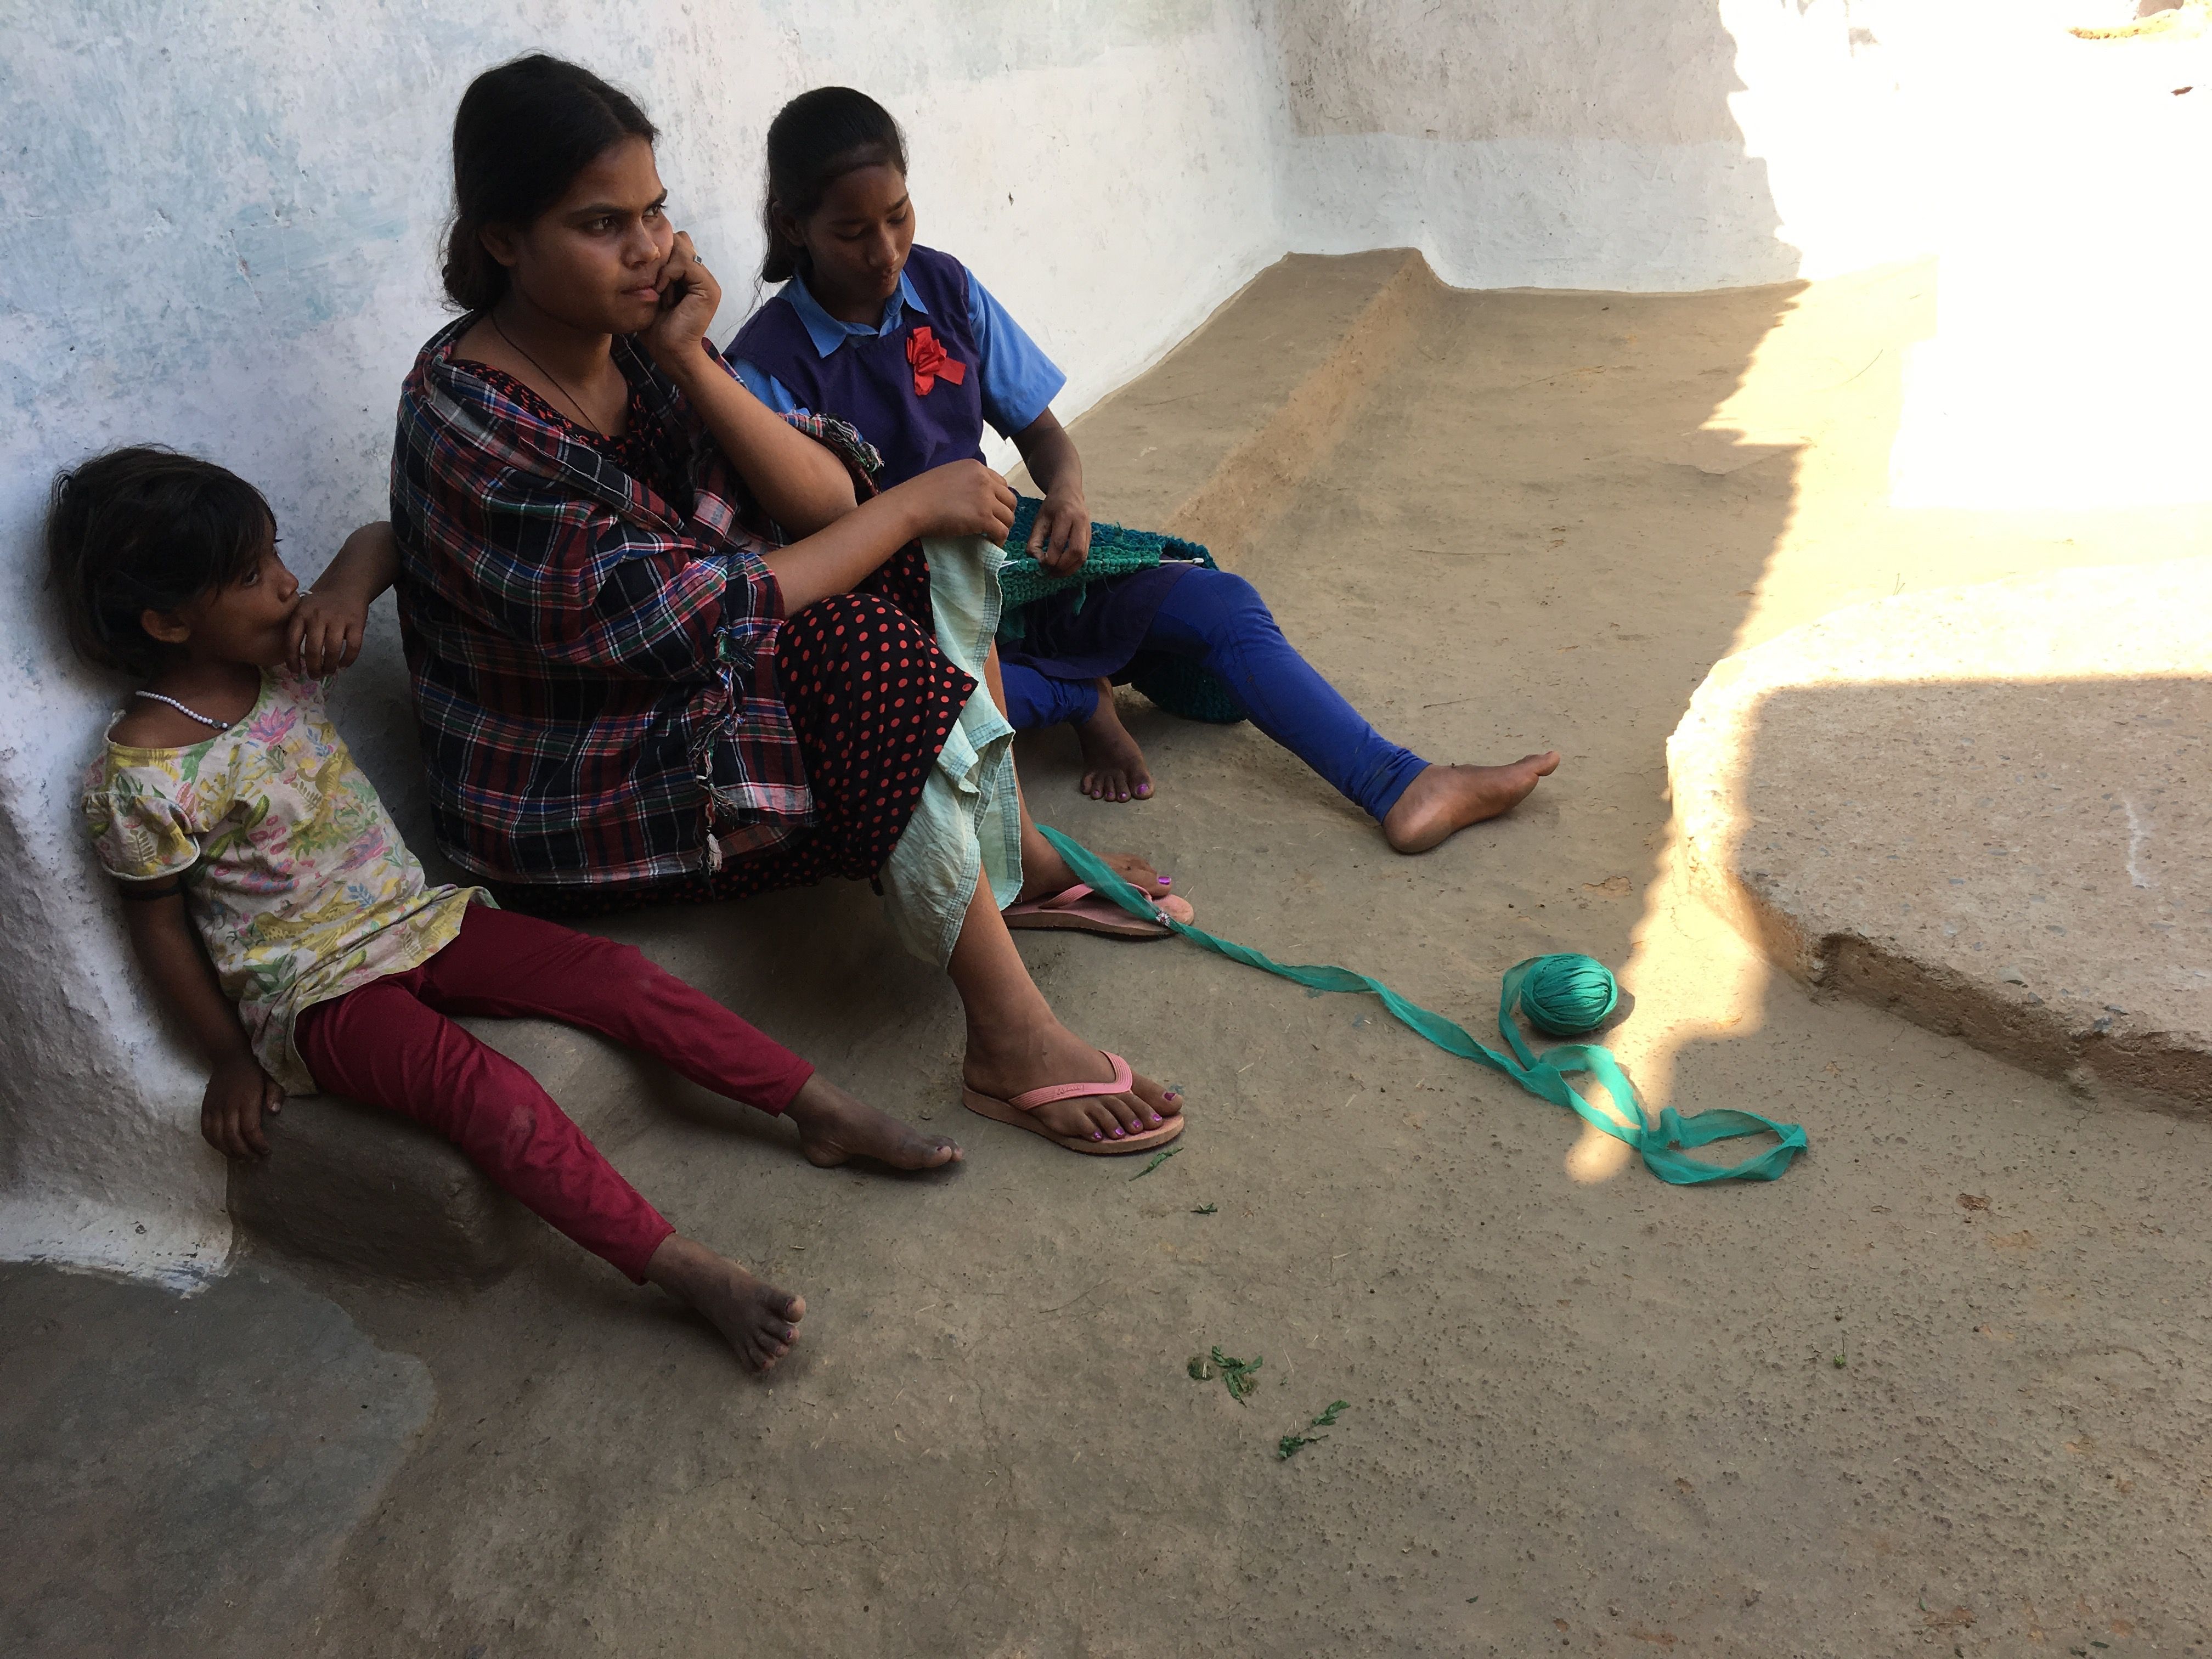 Family members of Shiv Kumari, who was killed at the sterilization camp. Image by Hannah Harris Green. India, 2018